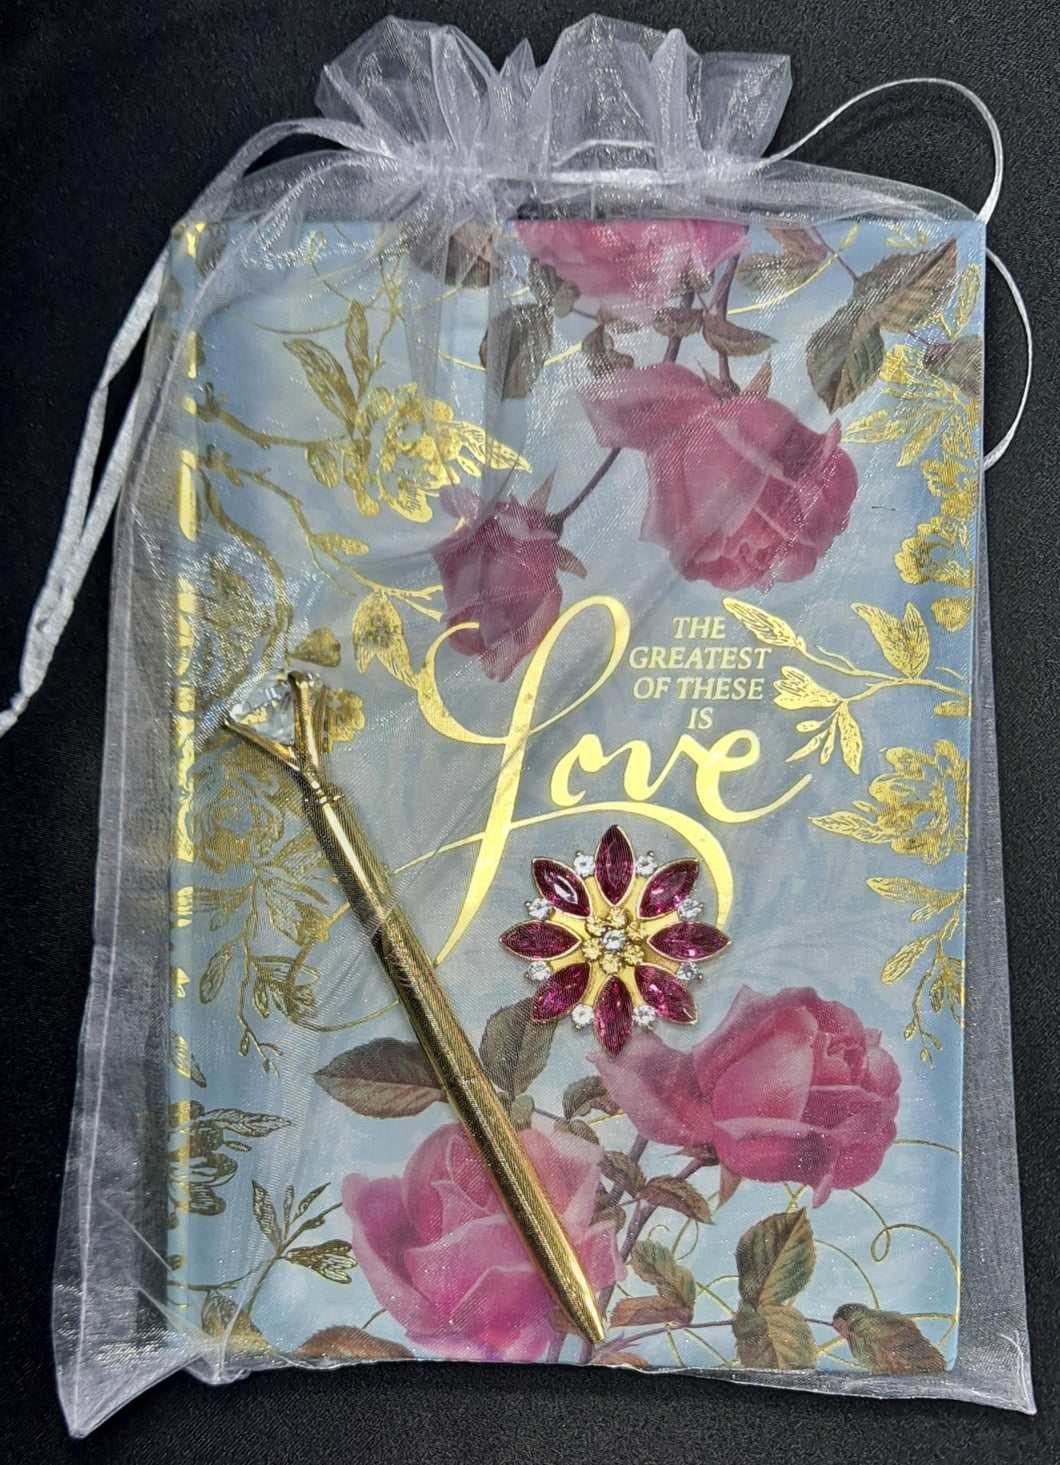 Journal & Pen Gift Set LOVE (FREE Shipping)